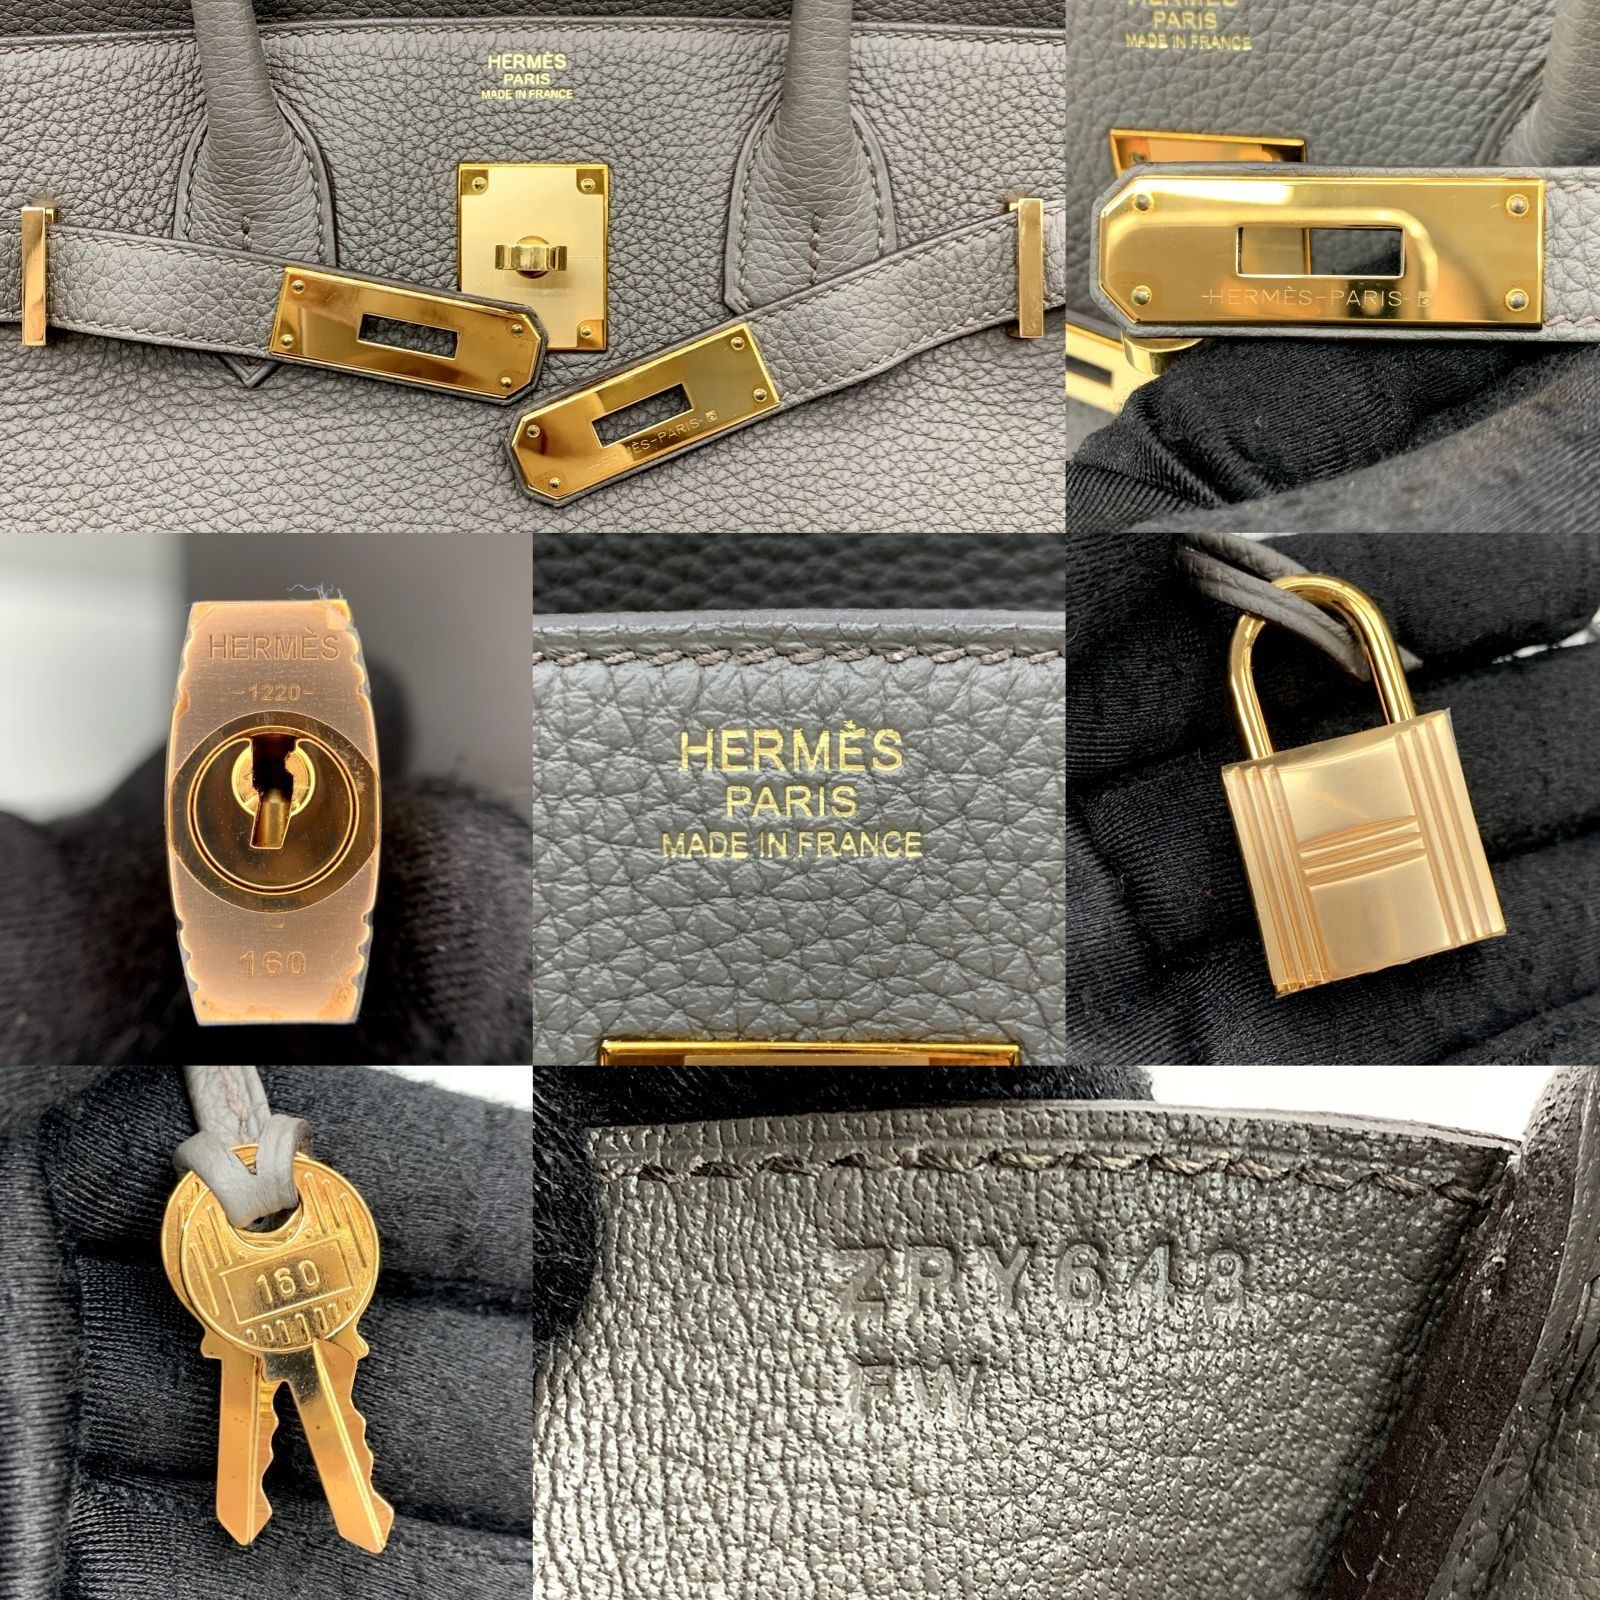 Hermes Birkin bag 30 Etain Togo leather Rose gold hardware